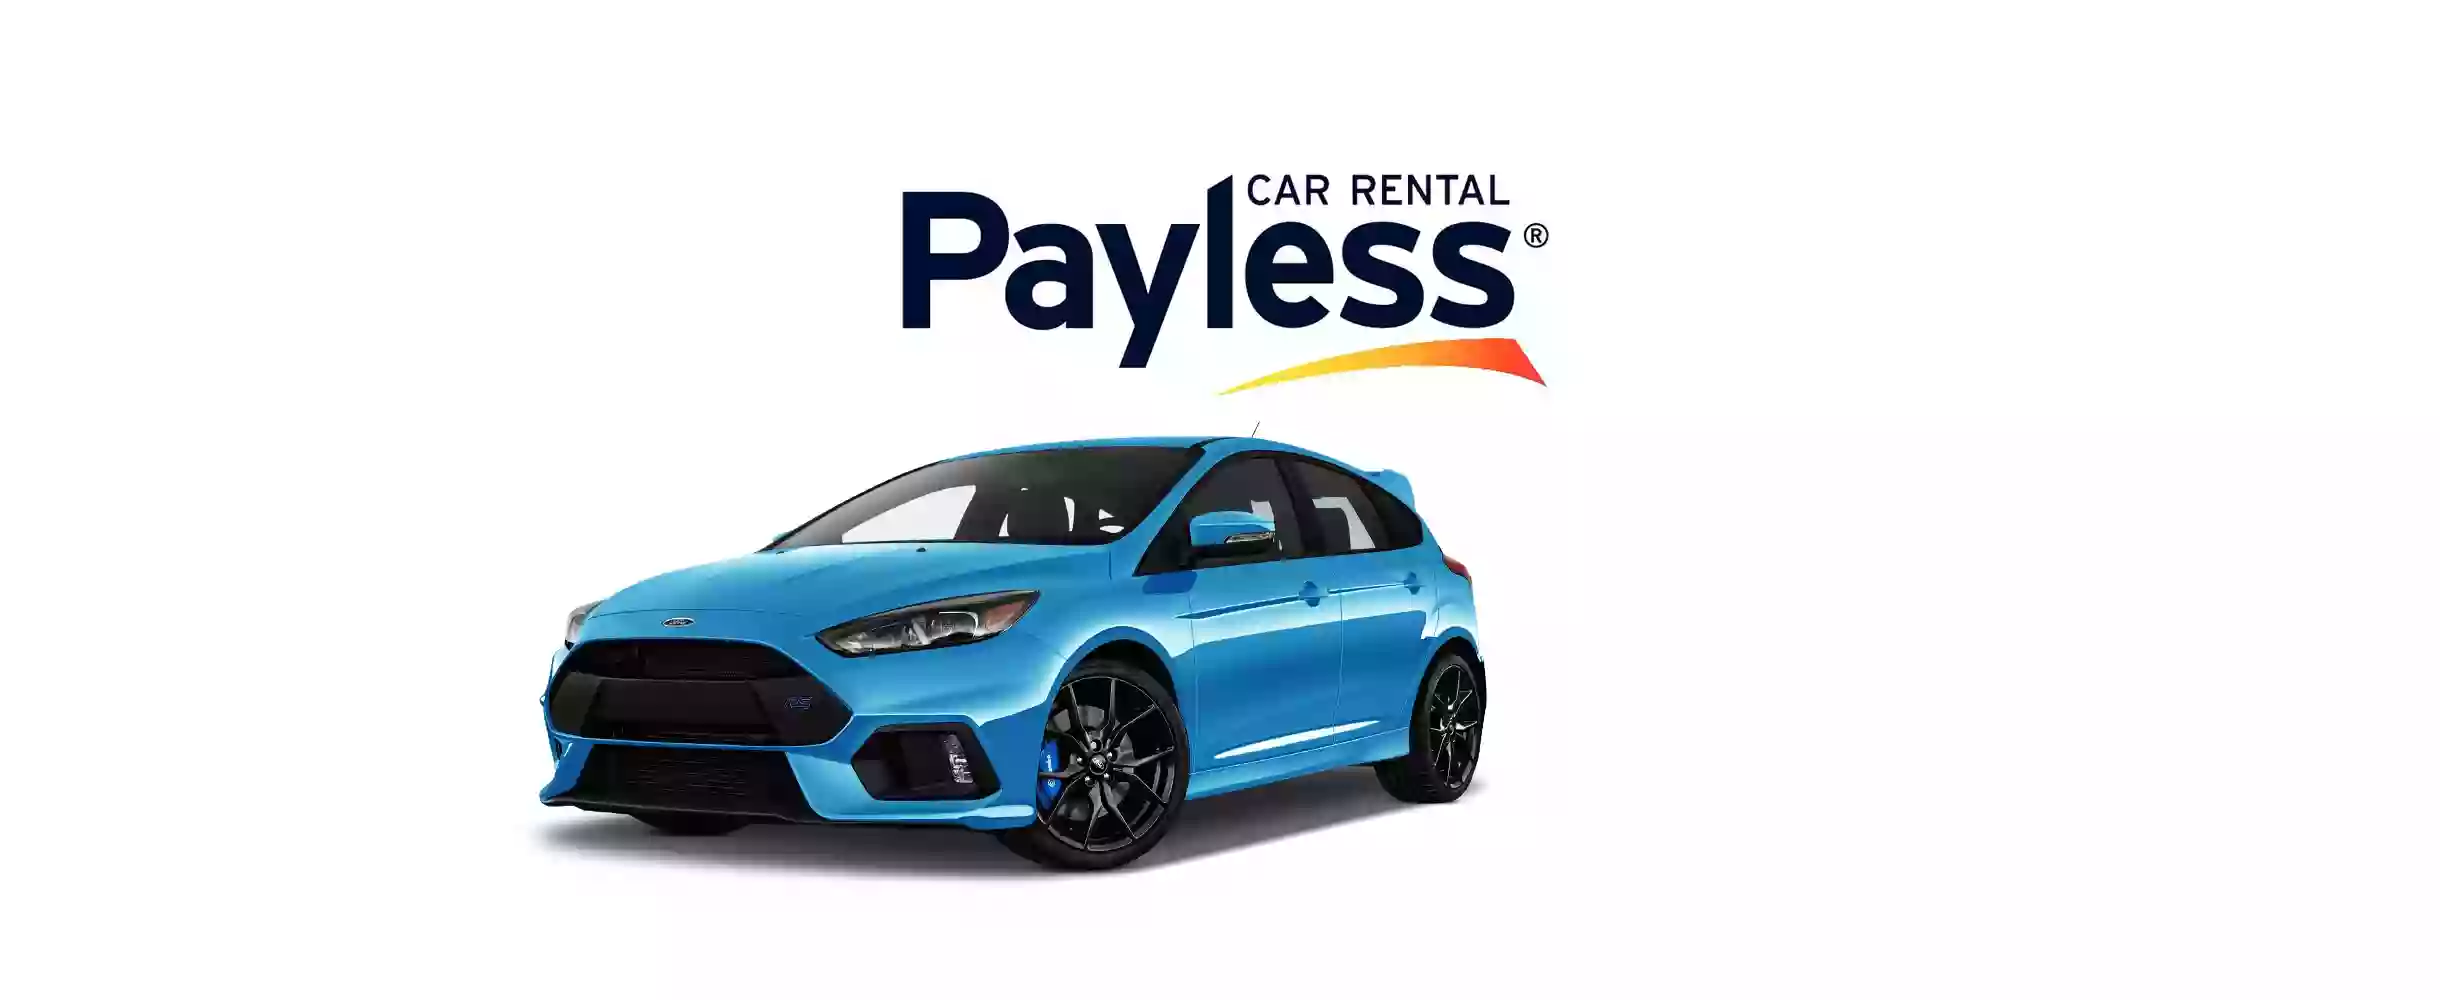 Avis/payless car